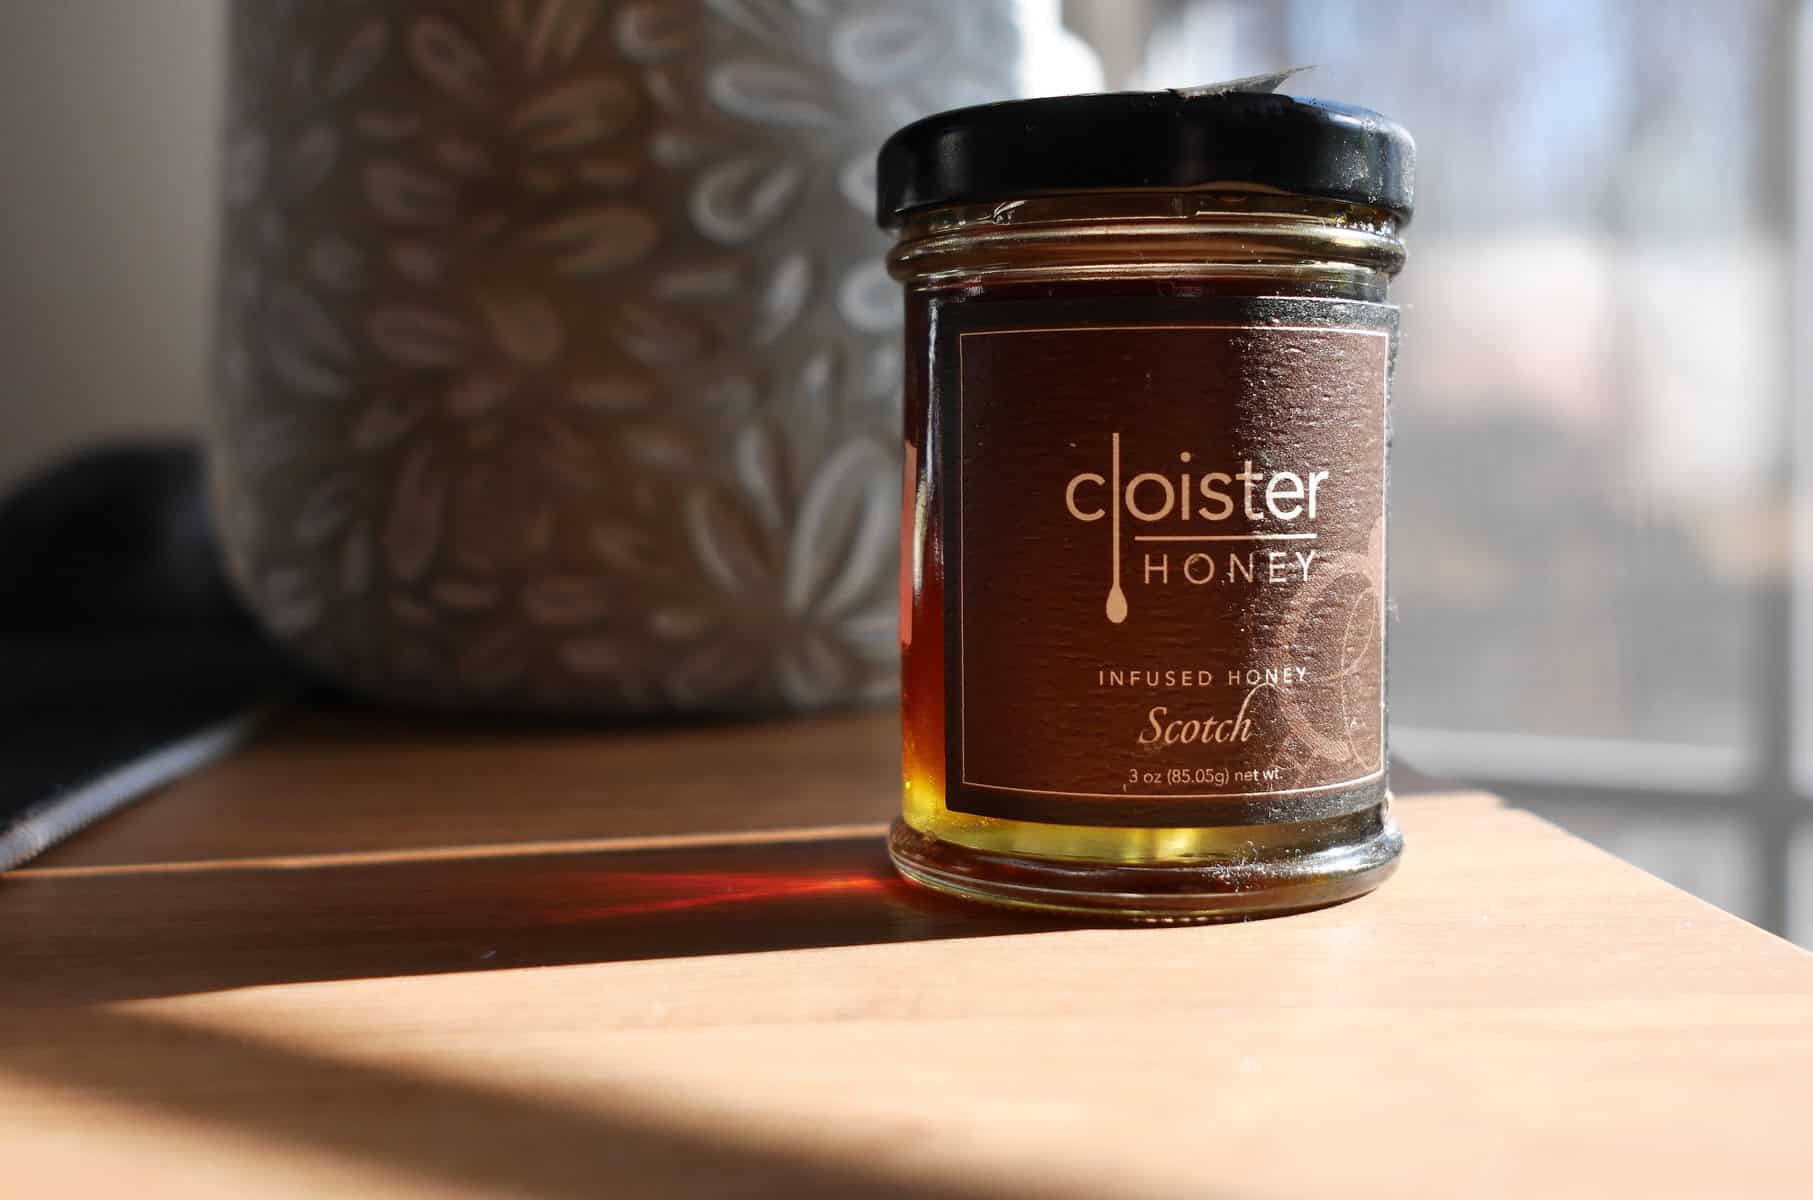 Cloister Honey Infused Scotch Honey 3oz Jar , Charlotte NC, TheHoneyReview